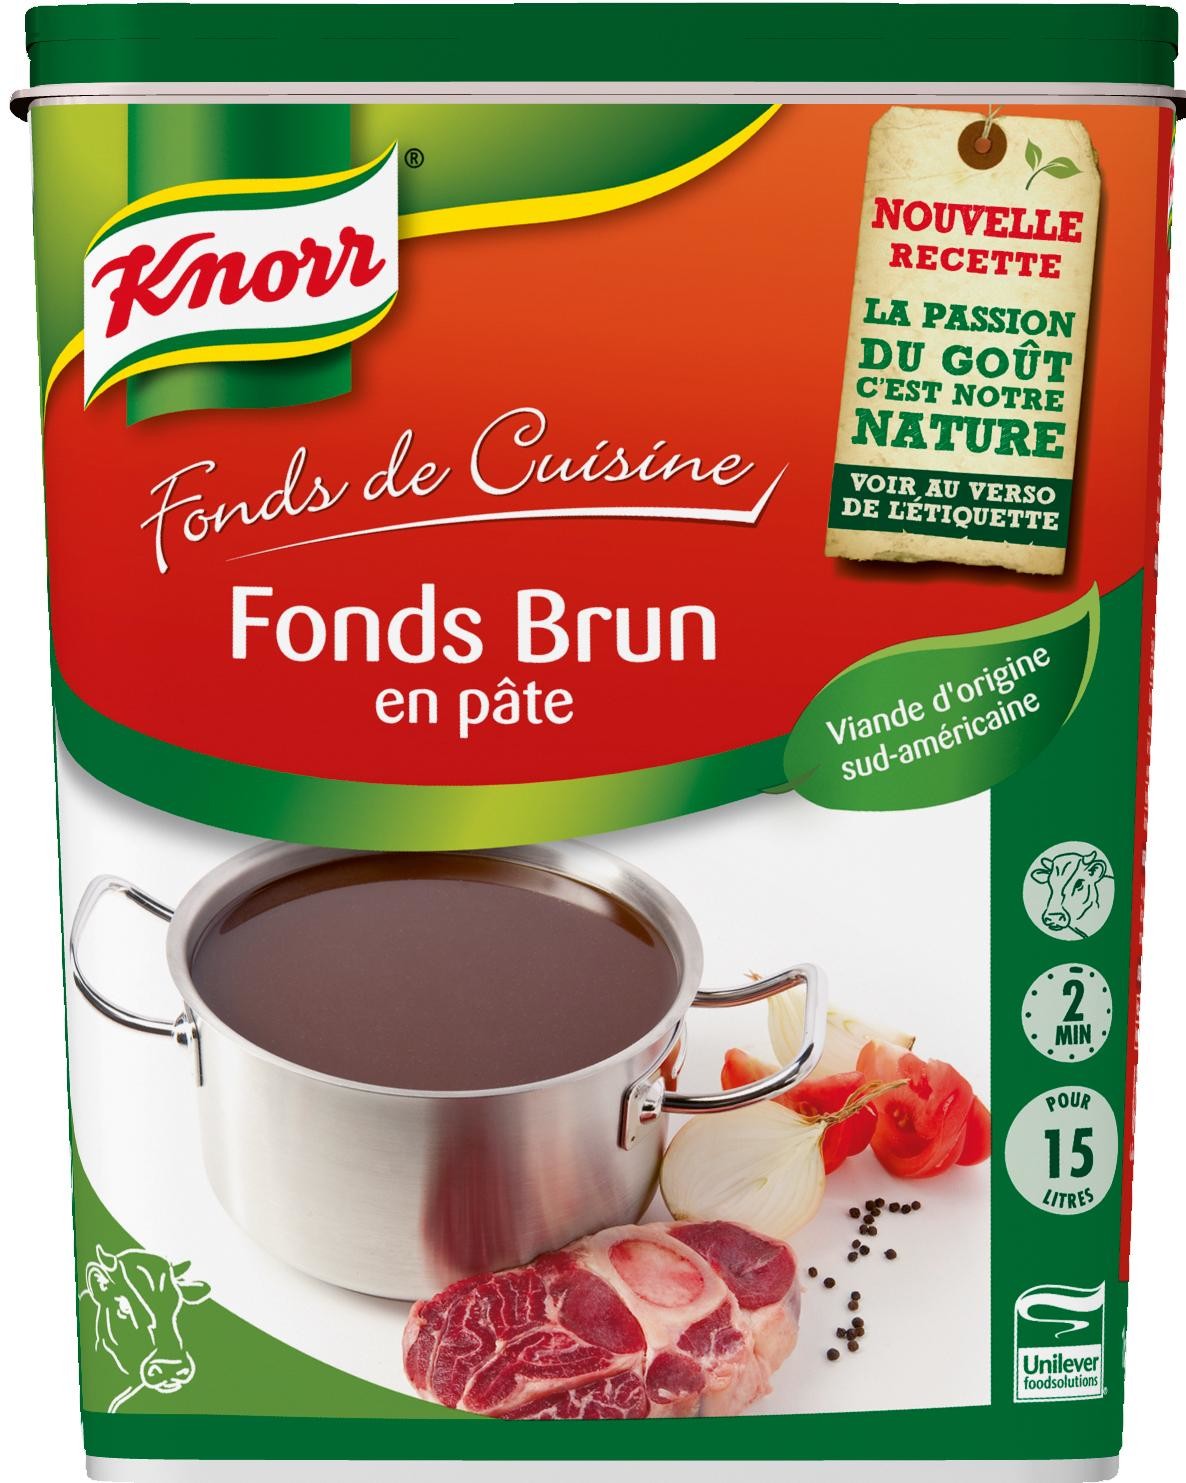 Knorr fond brun en pate 1kg Fonds de Cuisine